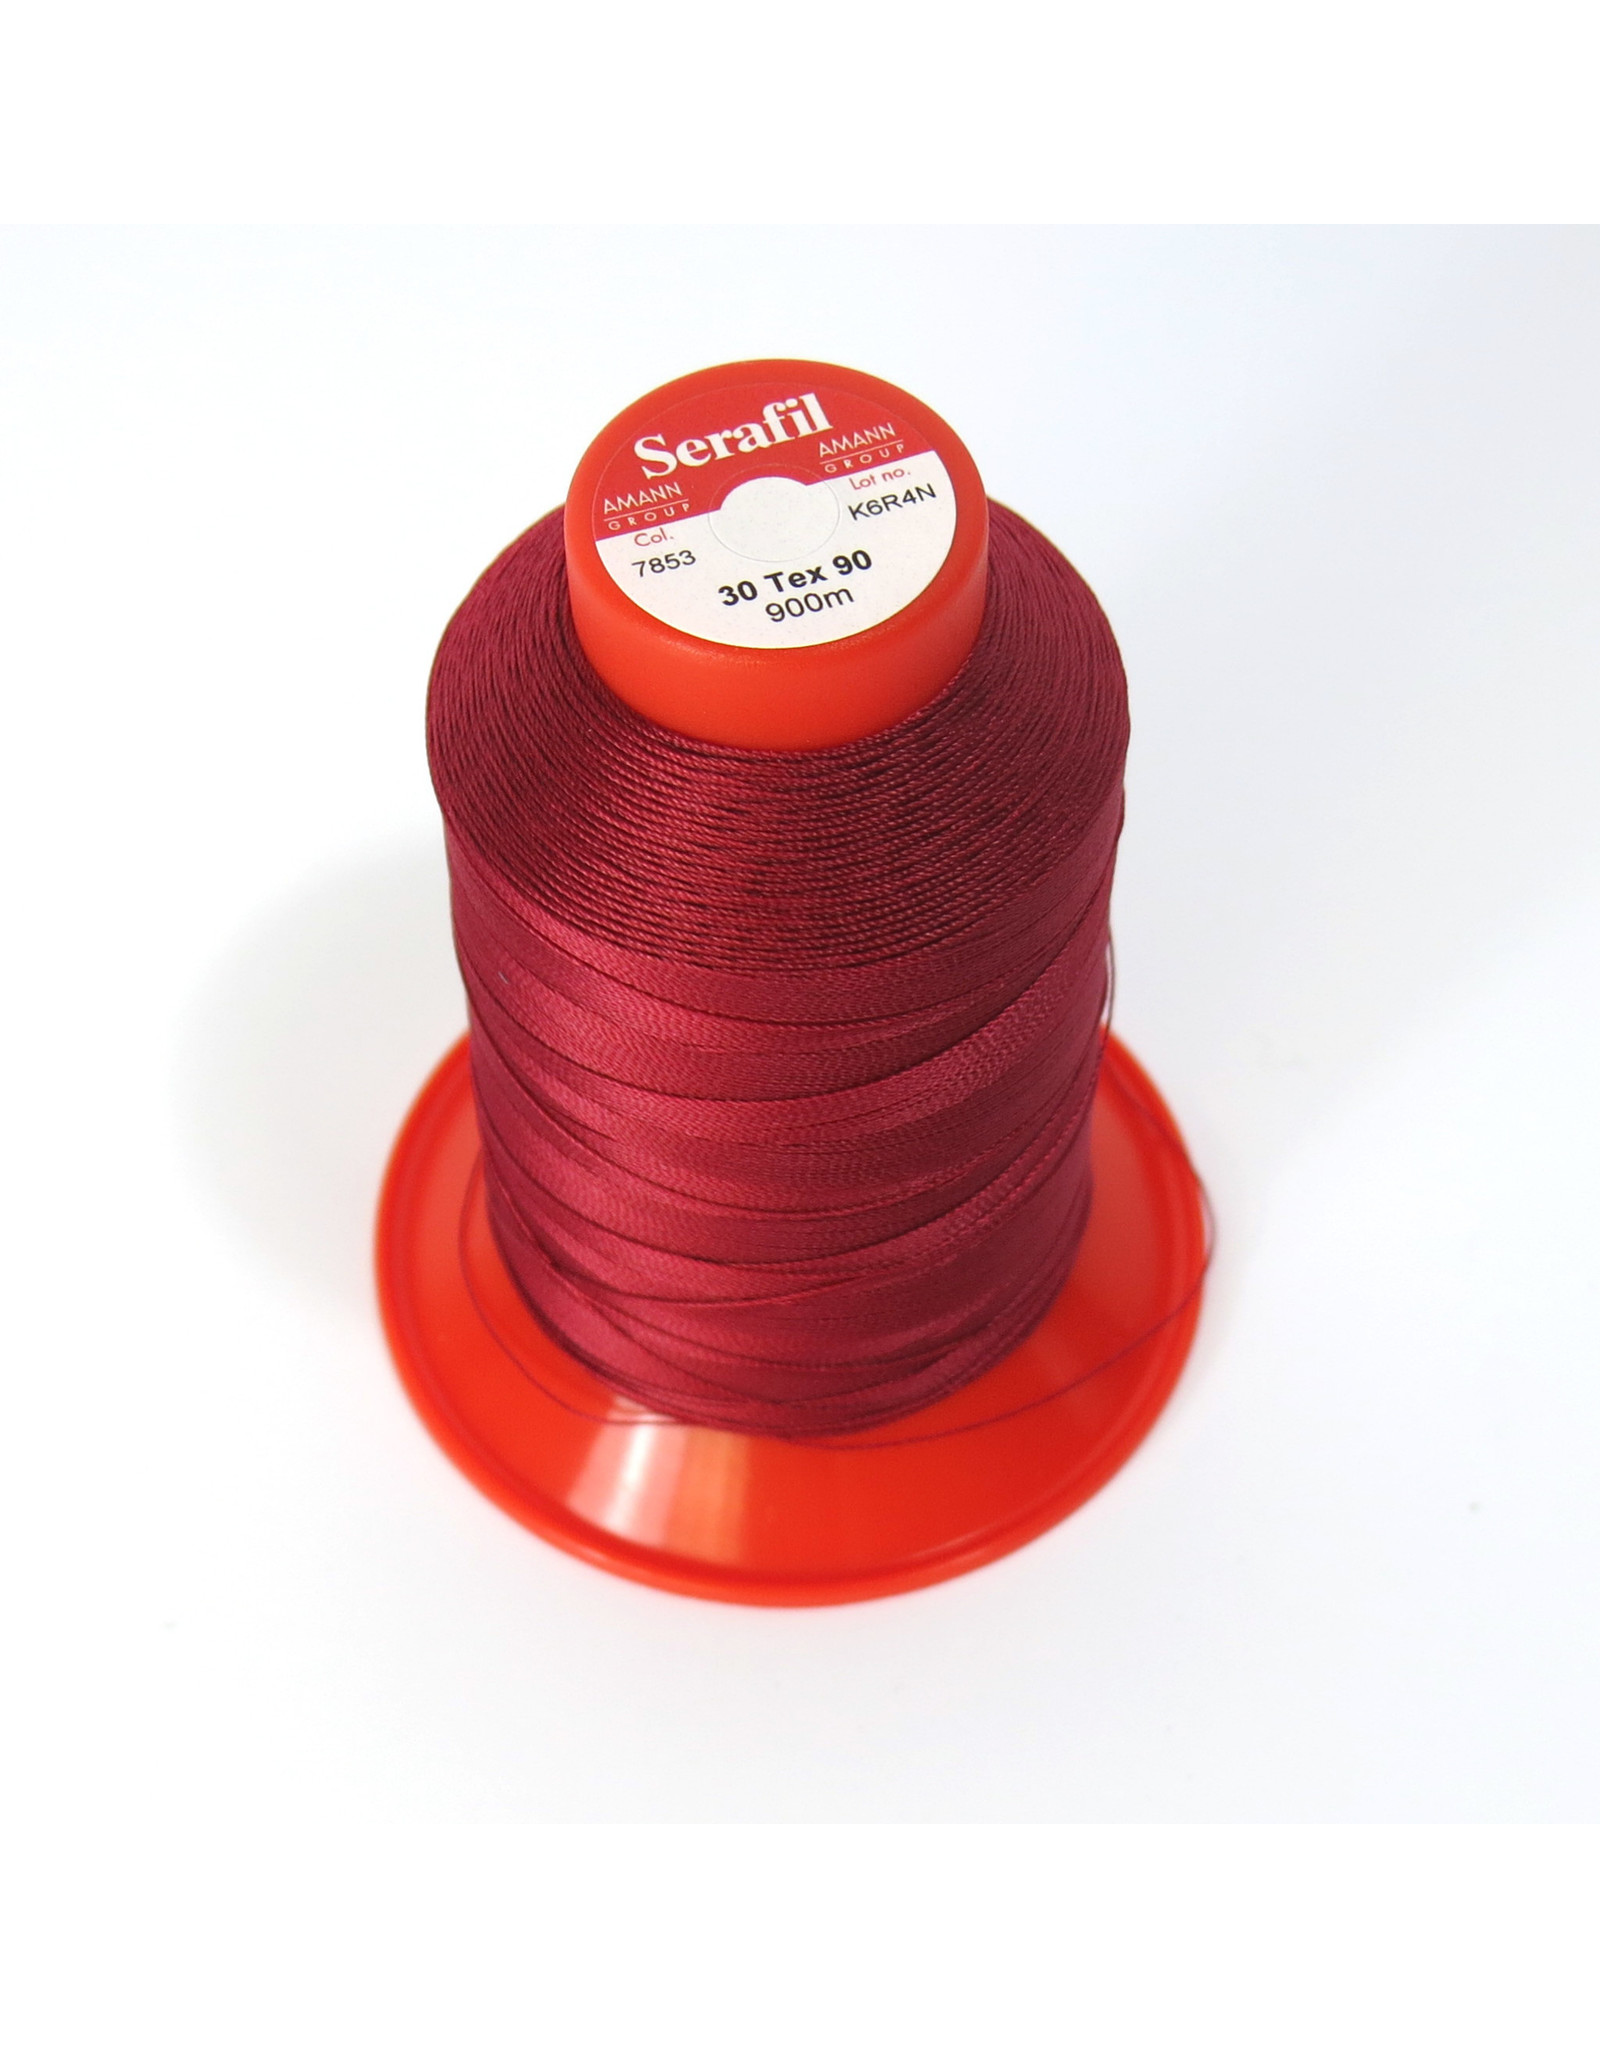 Serafil machine sewing threads 7853